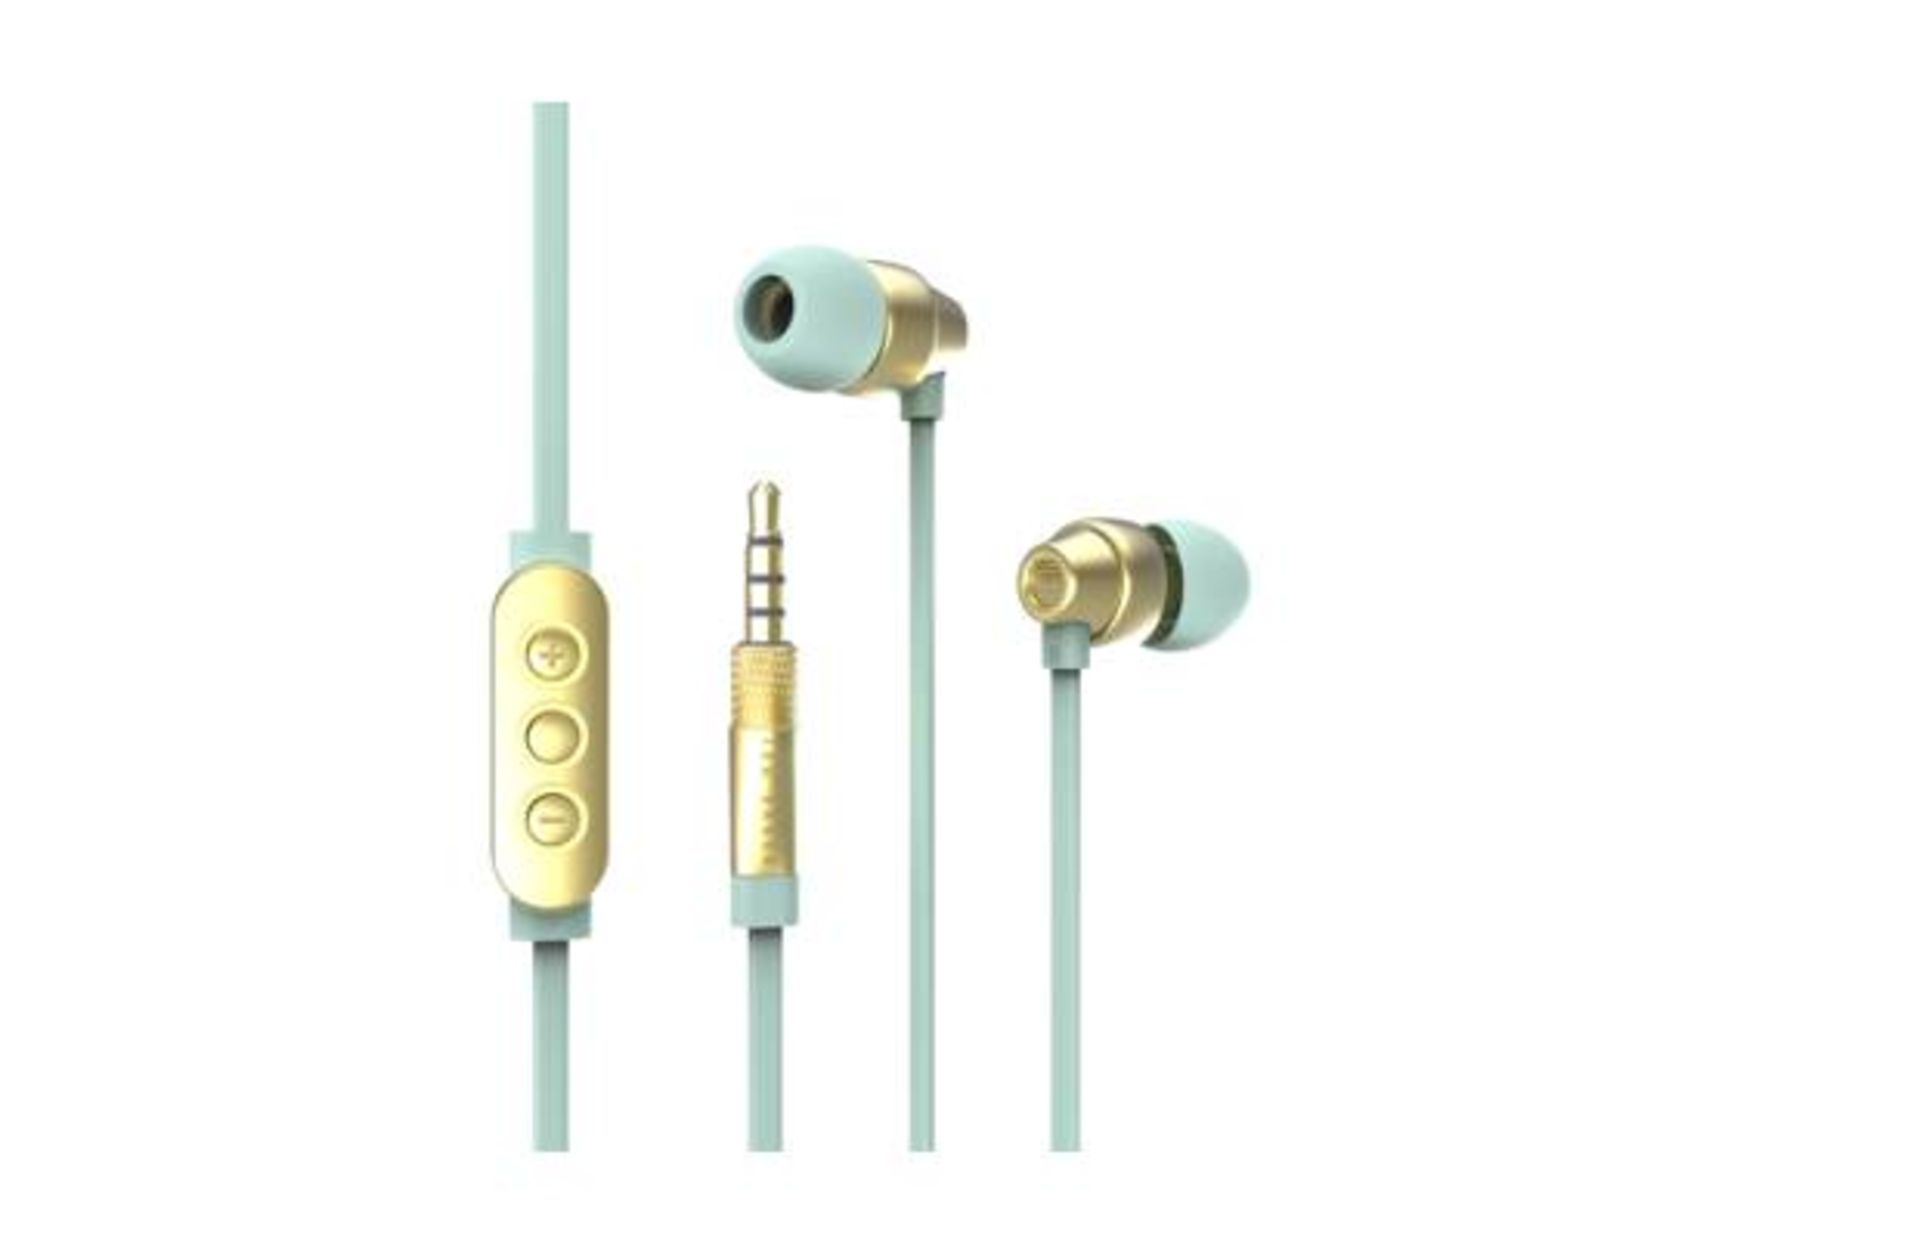 V Brand New Ted Baker Dover In-Ear Headphones - RRP £59.95 - In Mint/Gold - ISP £39.99 (Ebay) - Image 3 of 3